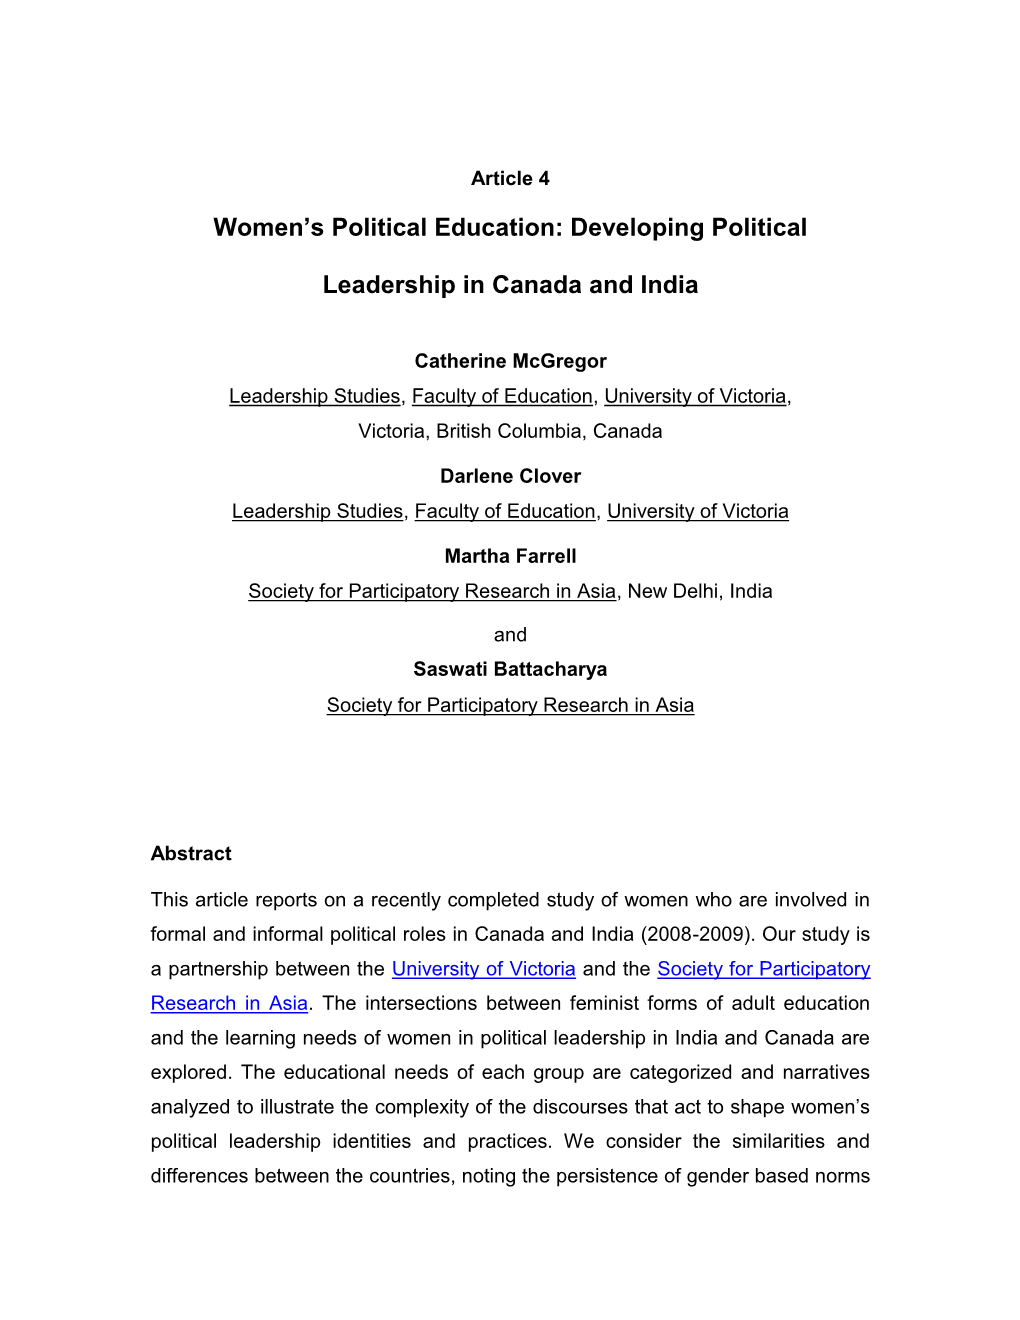 Women's Political Education